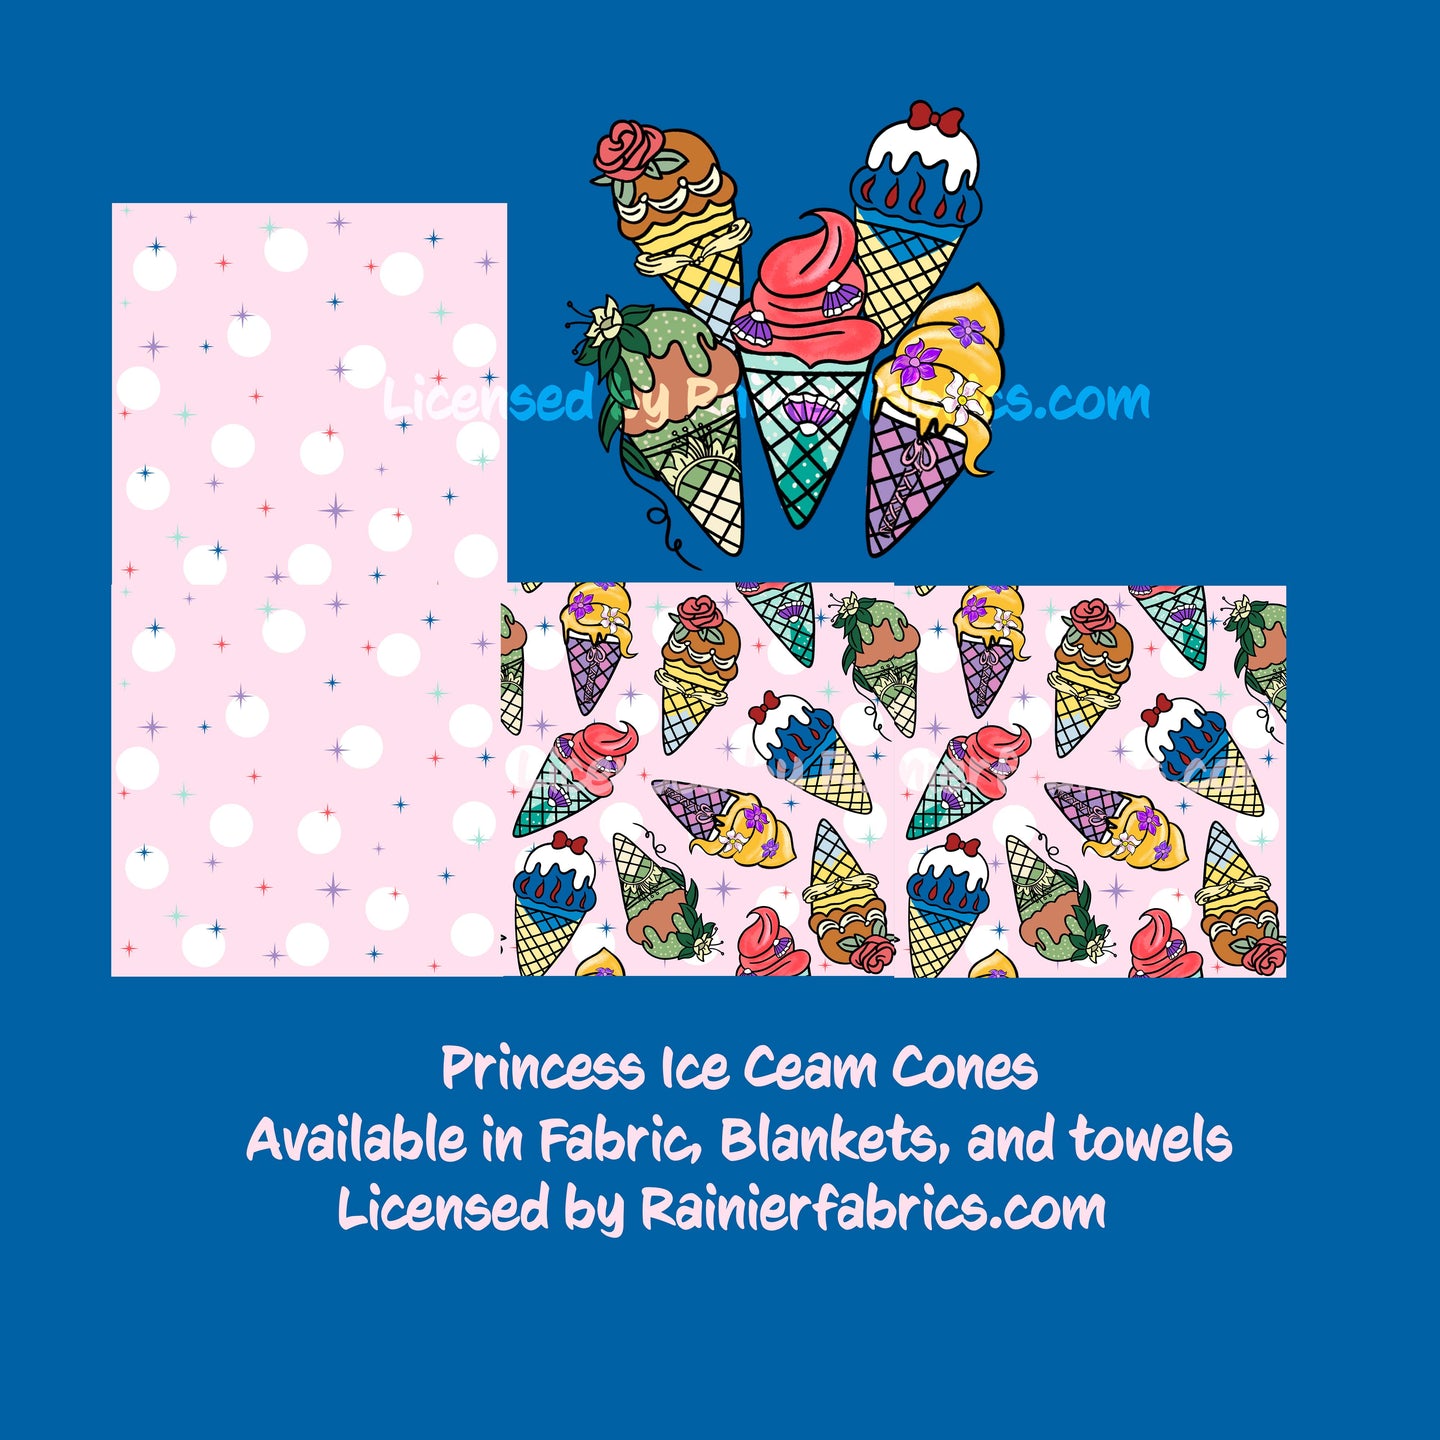 Princess Ice Cream Cones - 2-5 day turnaround - Order by 1/2 yard; Description of bases below